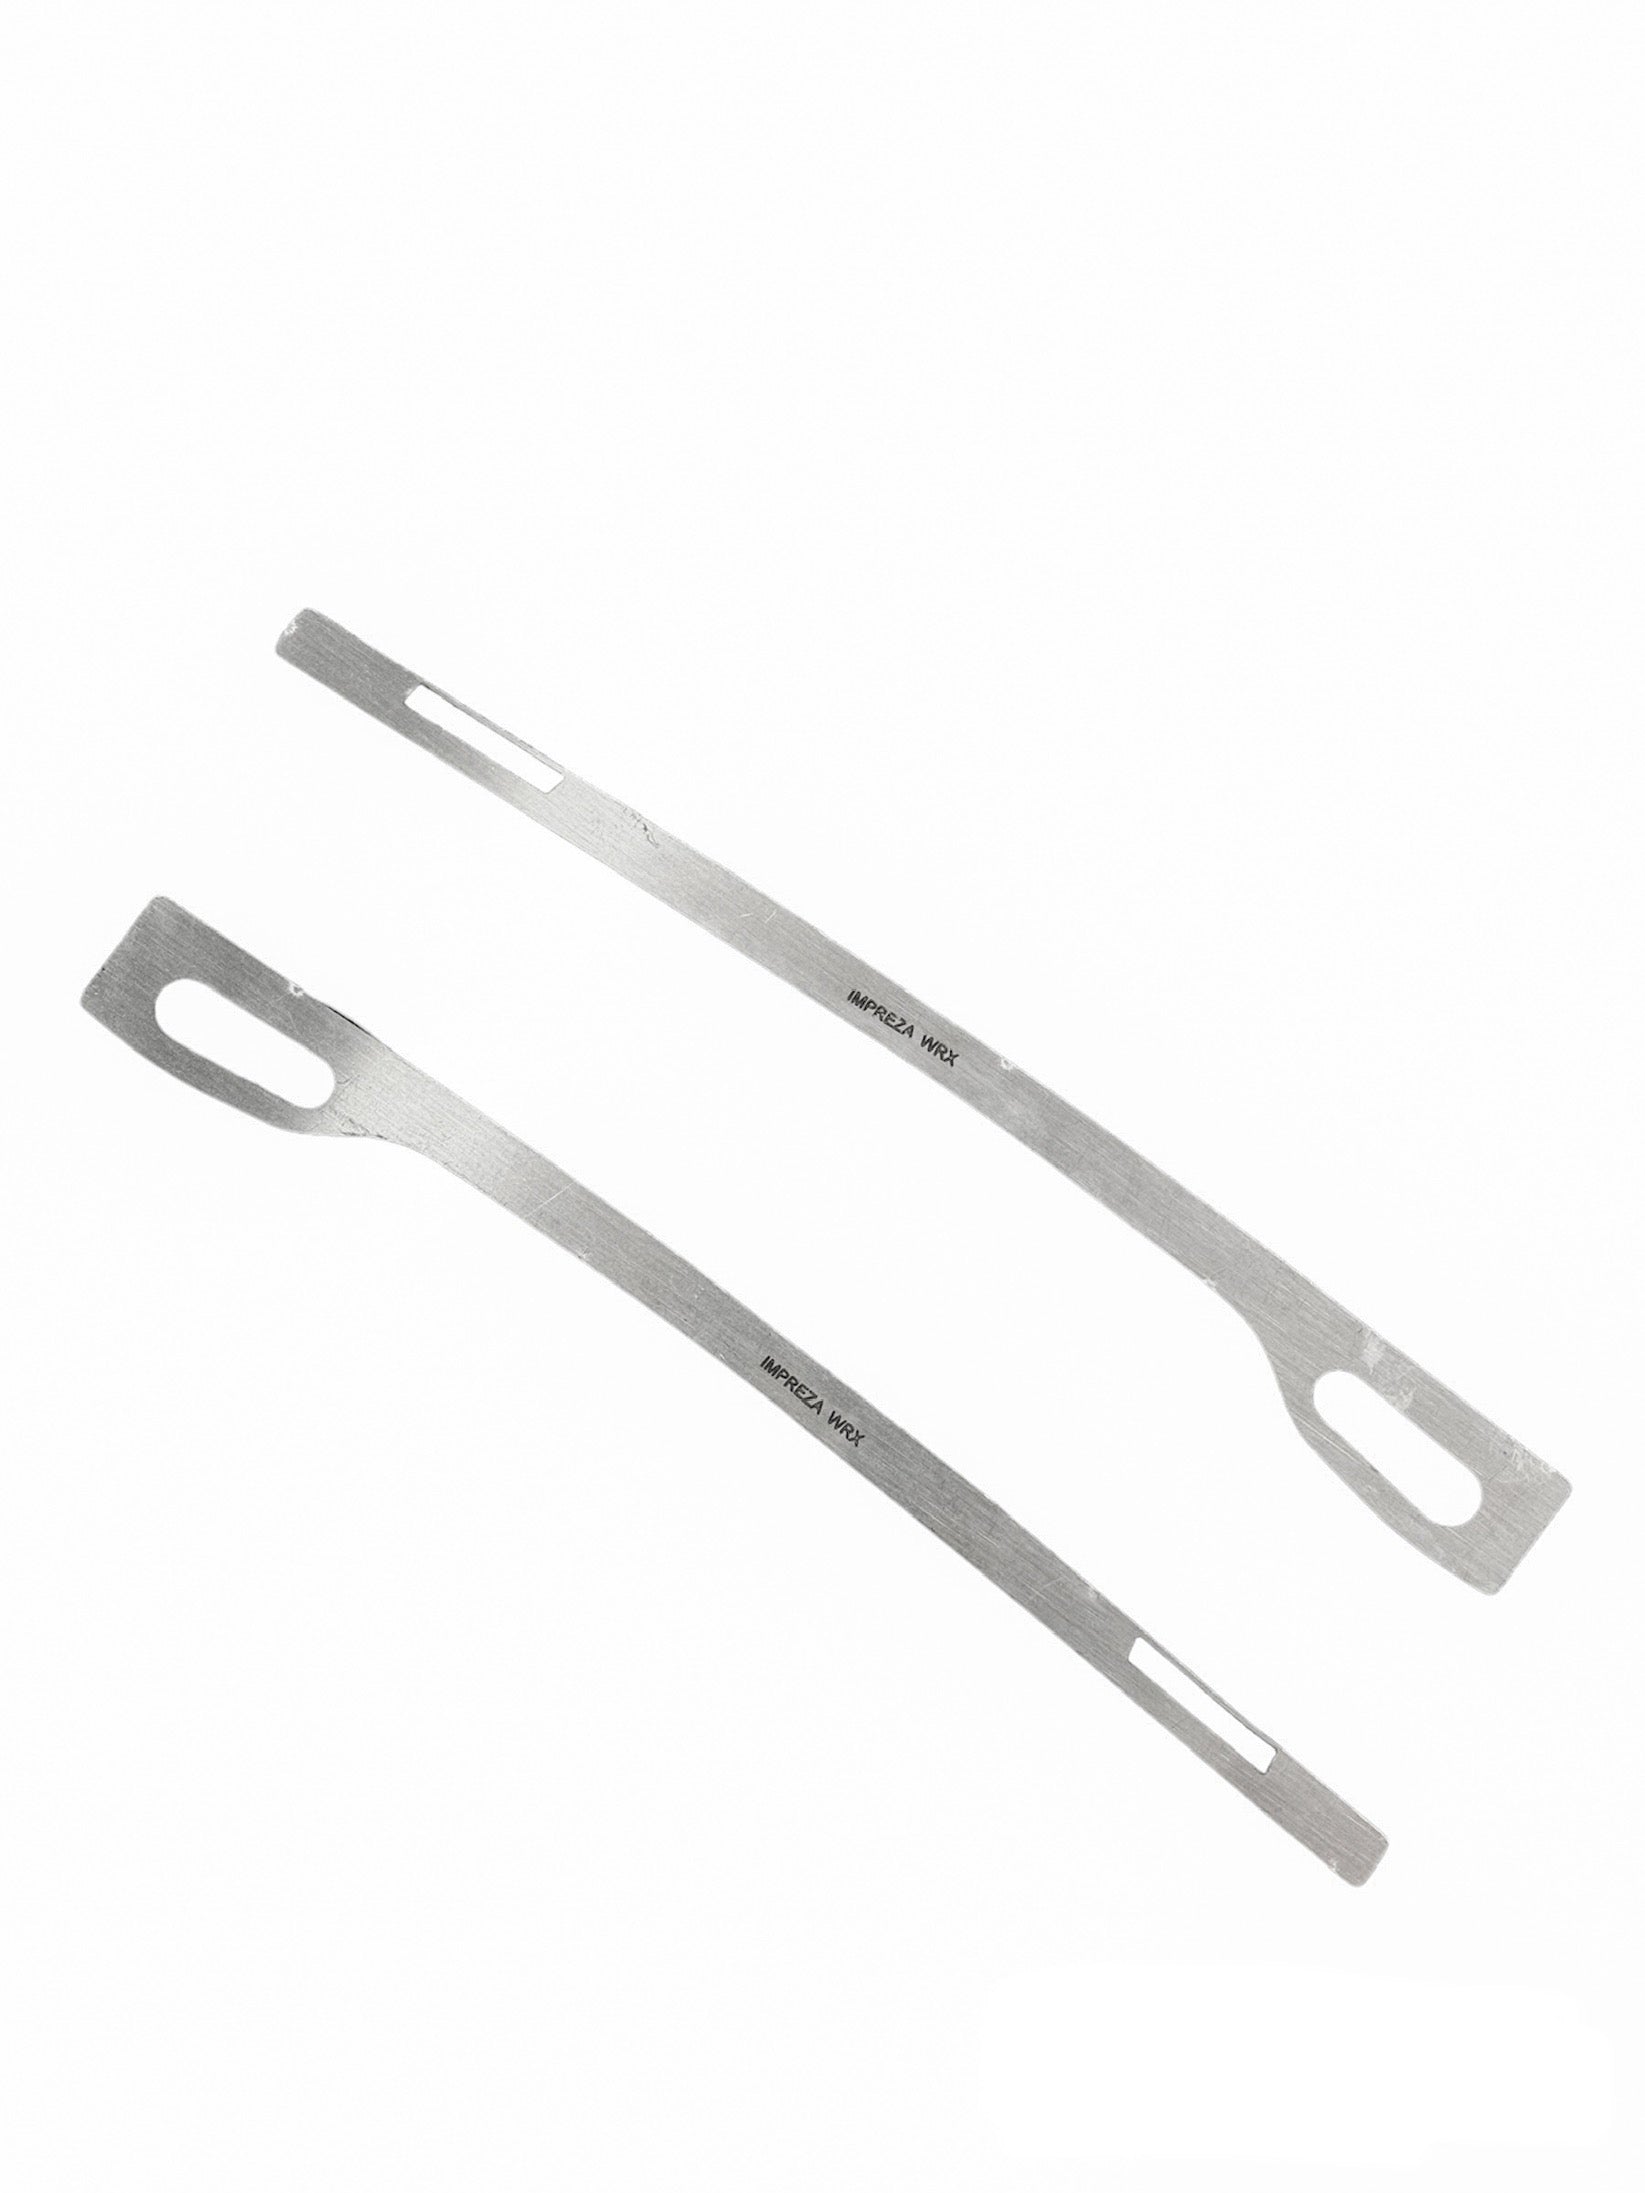 MLK - WRX STi “Blobeye” front bumper tab repair kit